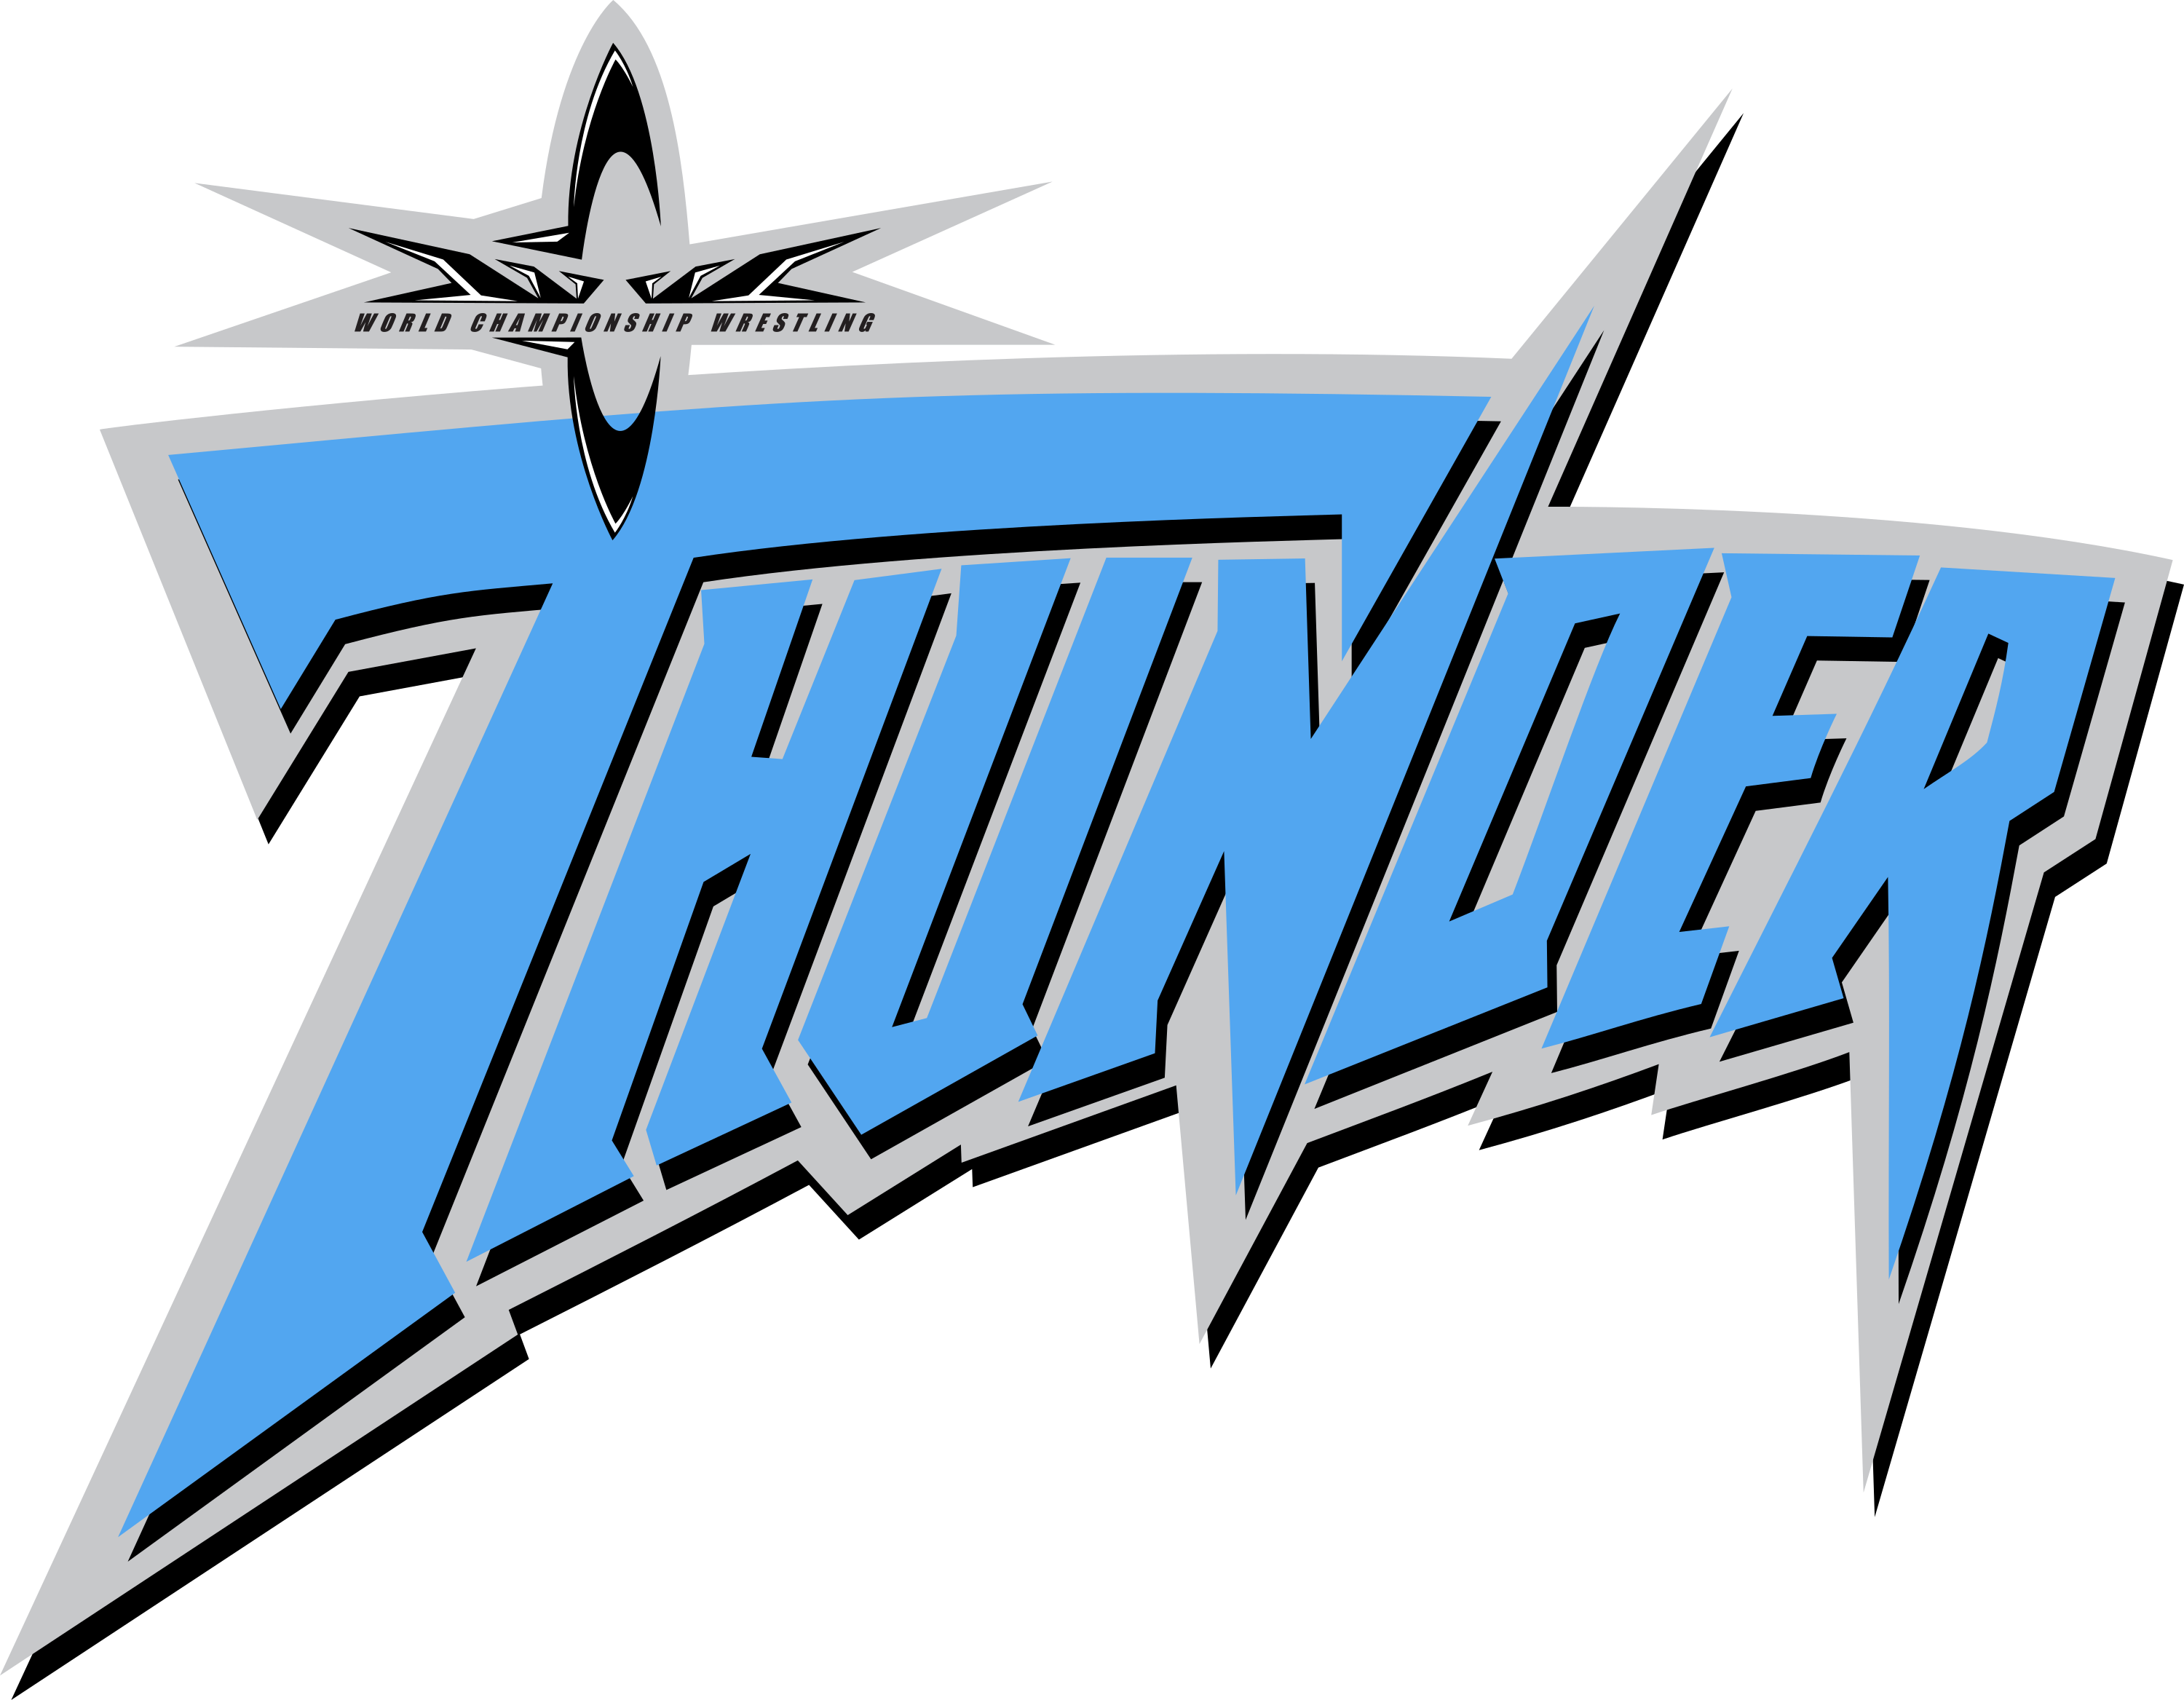 WCW Thunder (1998-2001) Logo by DarkVoidPictures on DeviantArt